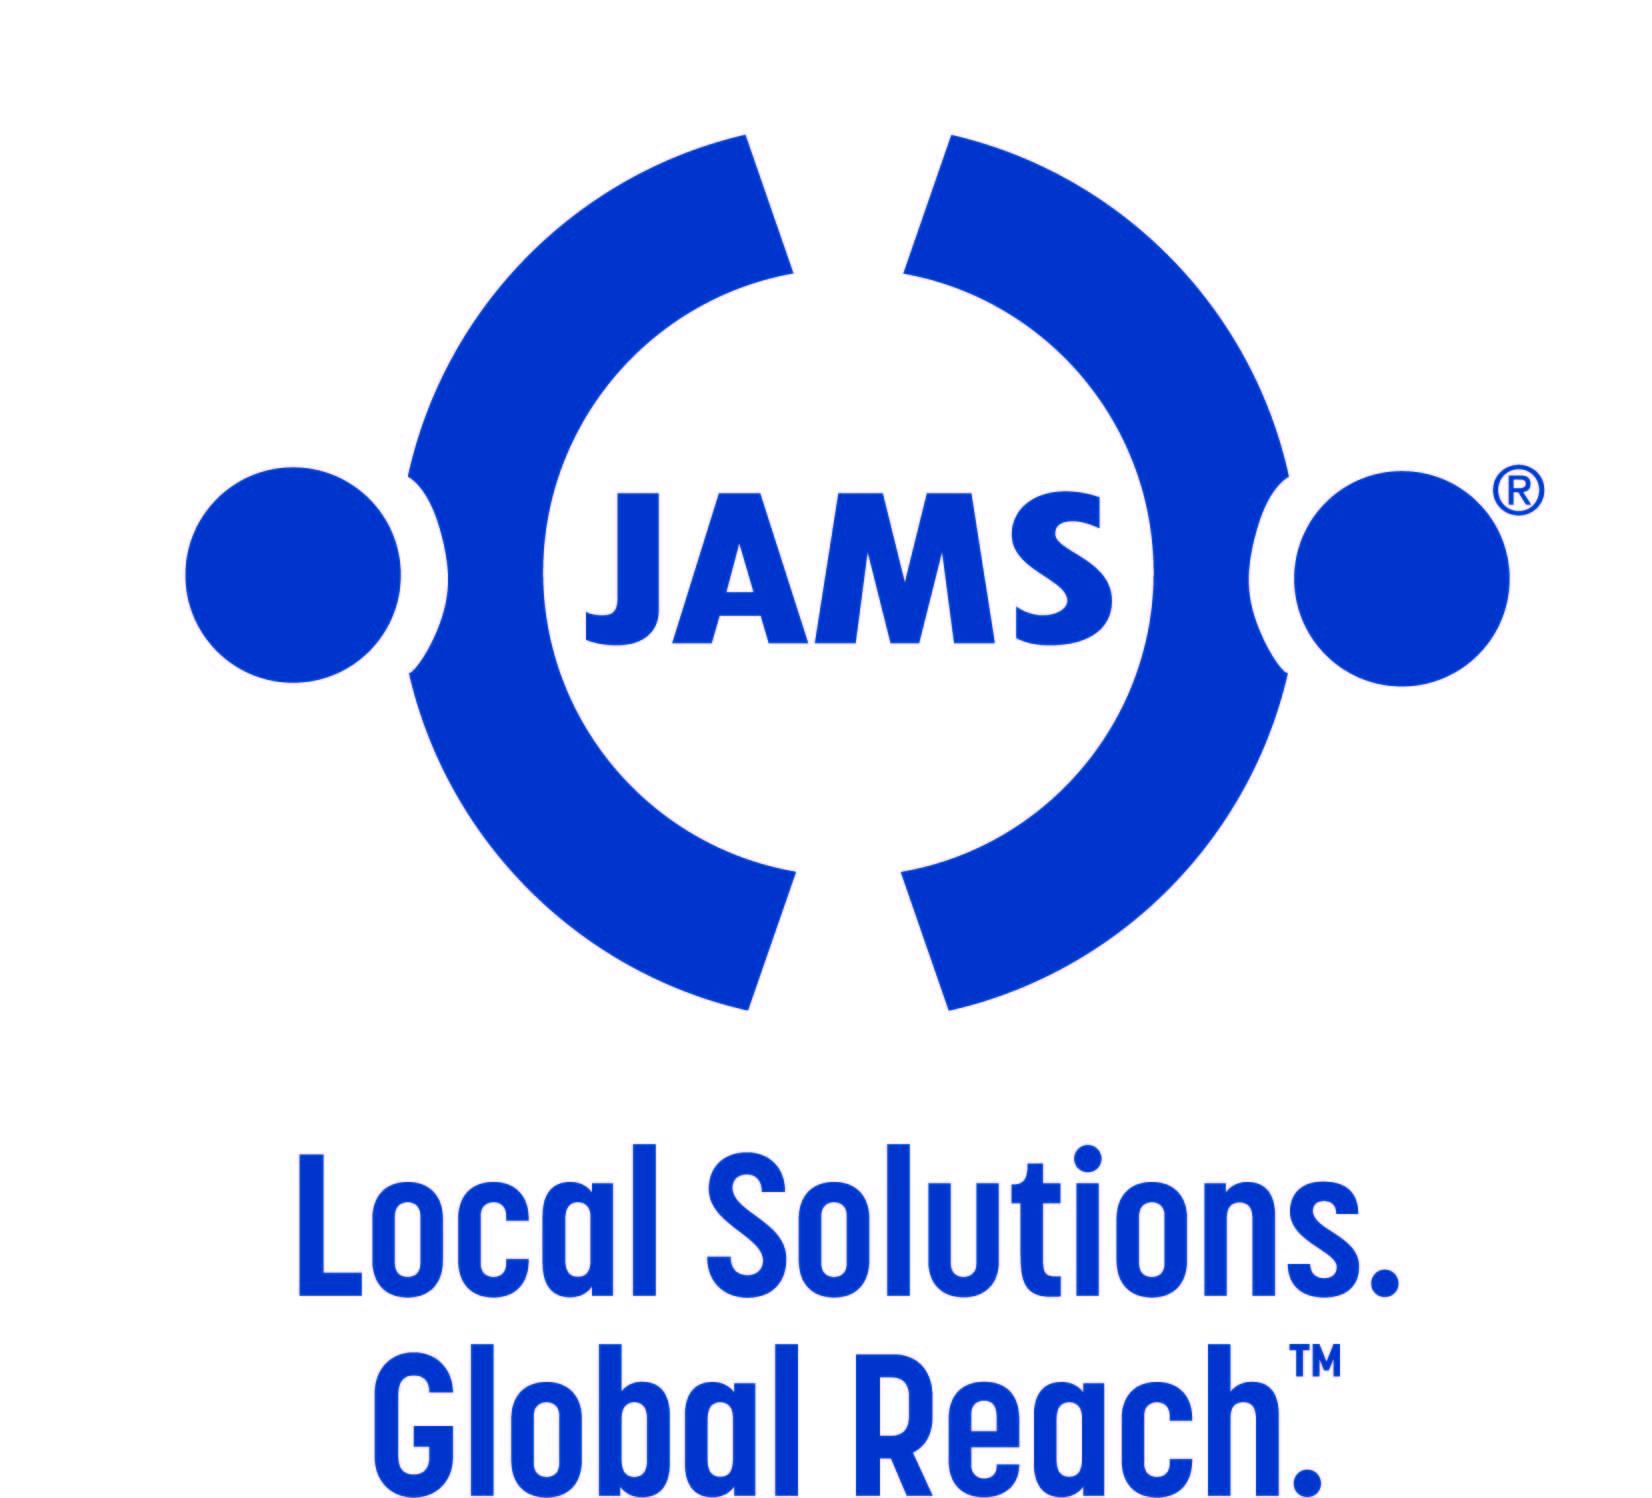 JAMS - Local Solutions. Global Reach.TM